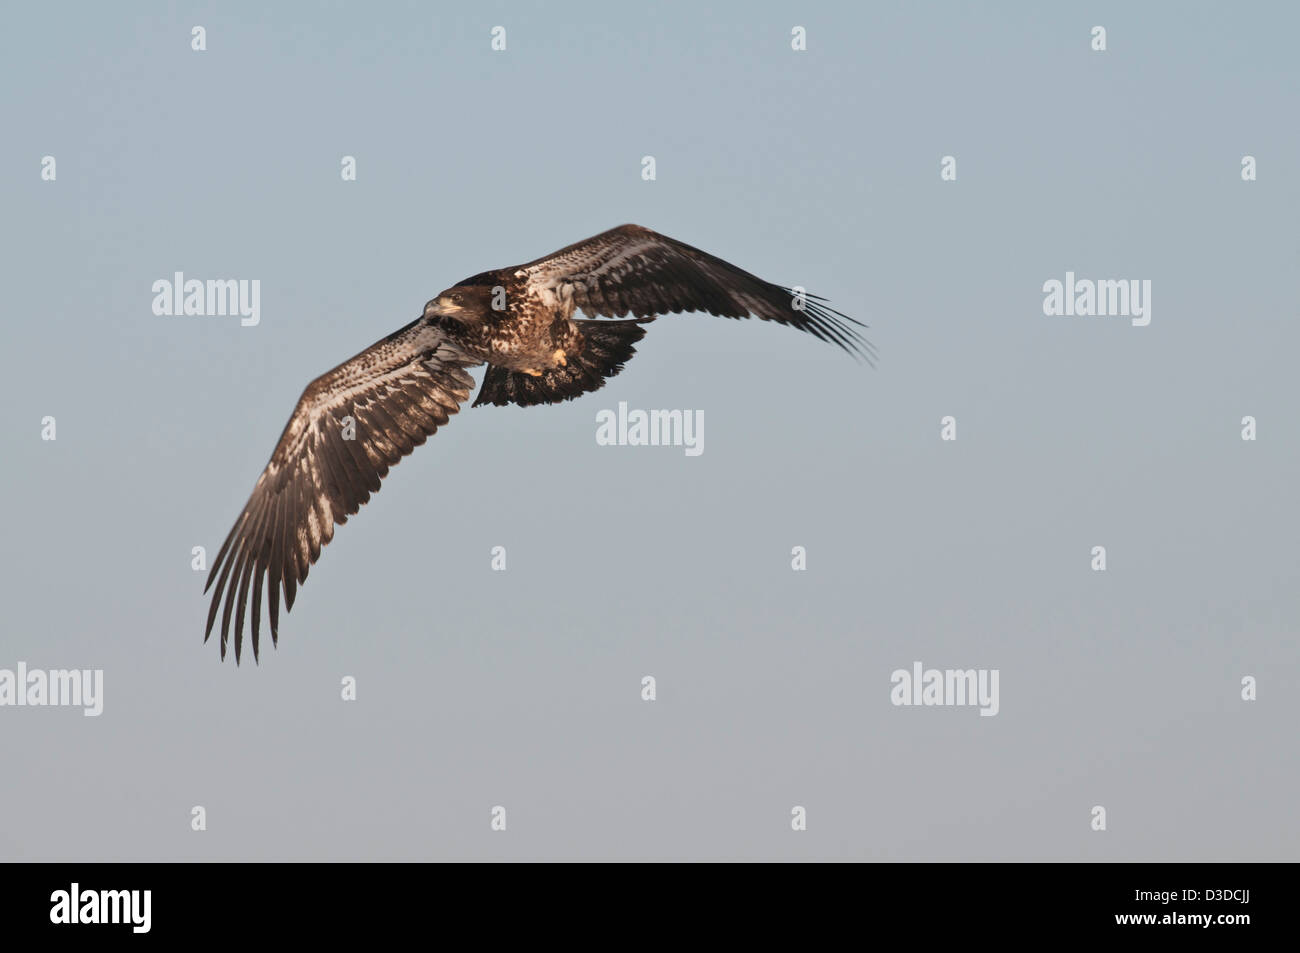 Stock photo of a juvenile bald eagle in flight. Stock Photo